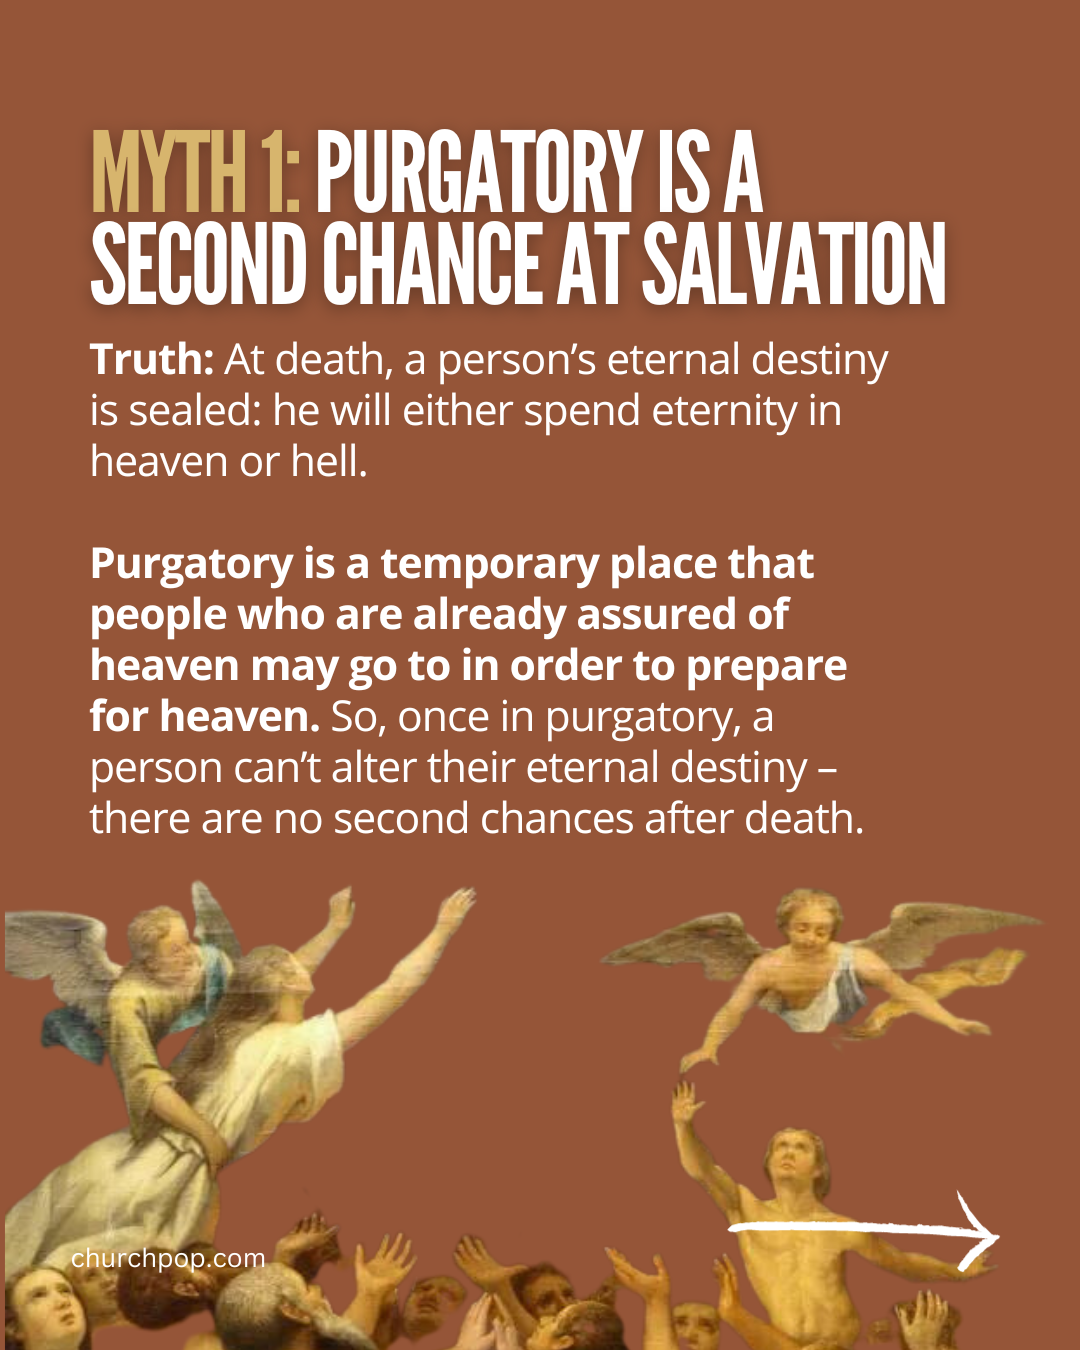 purgatory definition, purgatory meaning, purgatory in the bible, purgatory and the bible